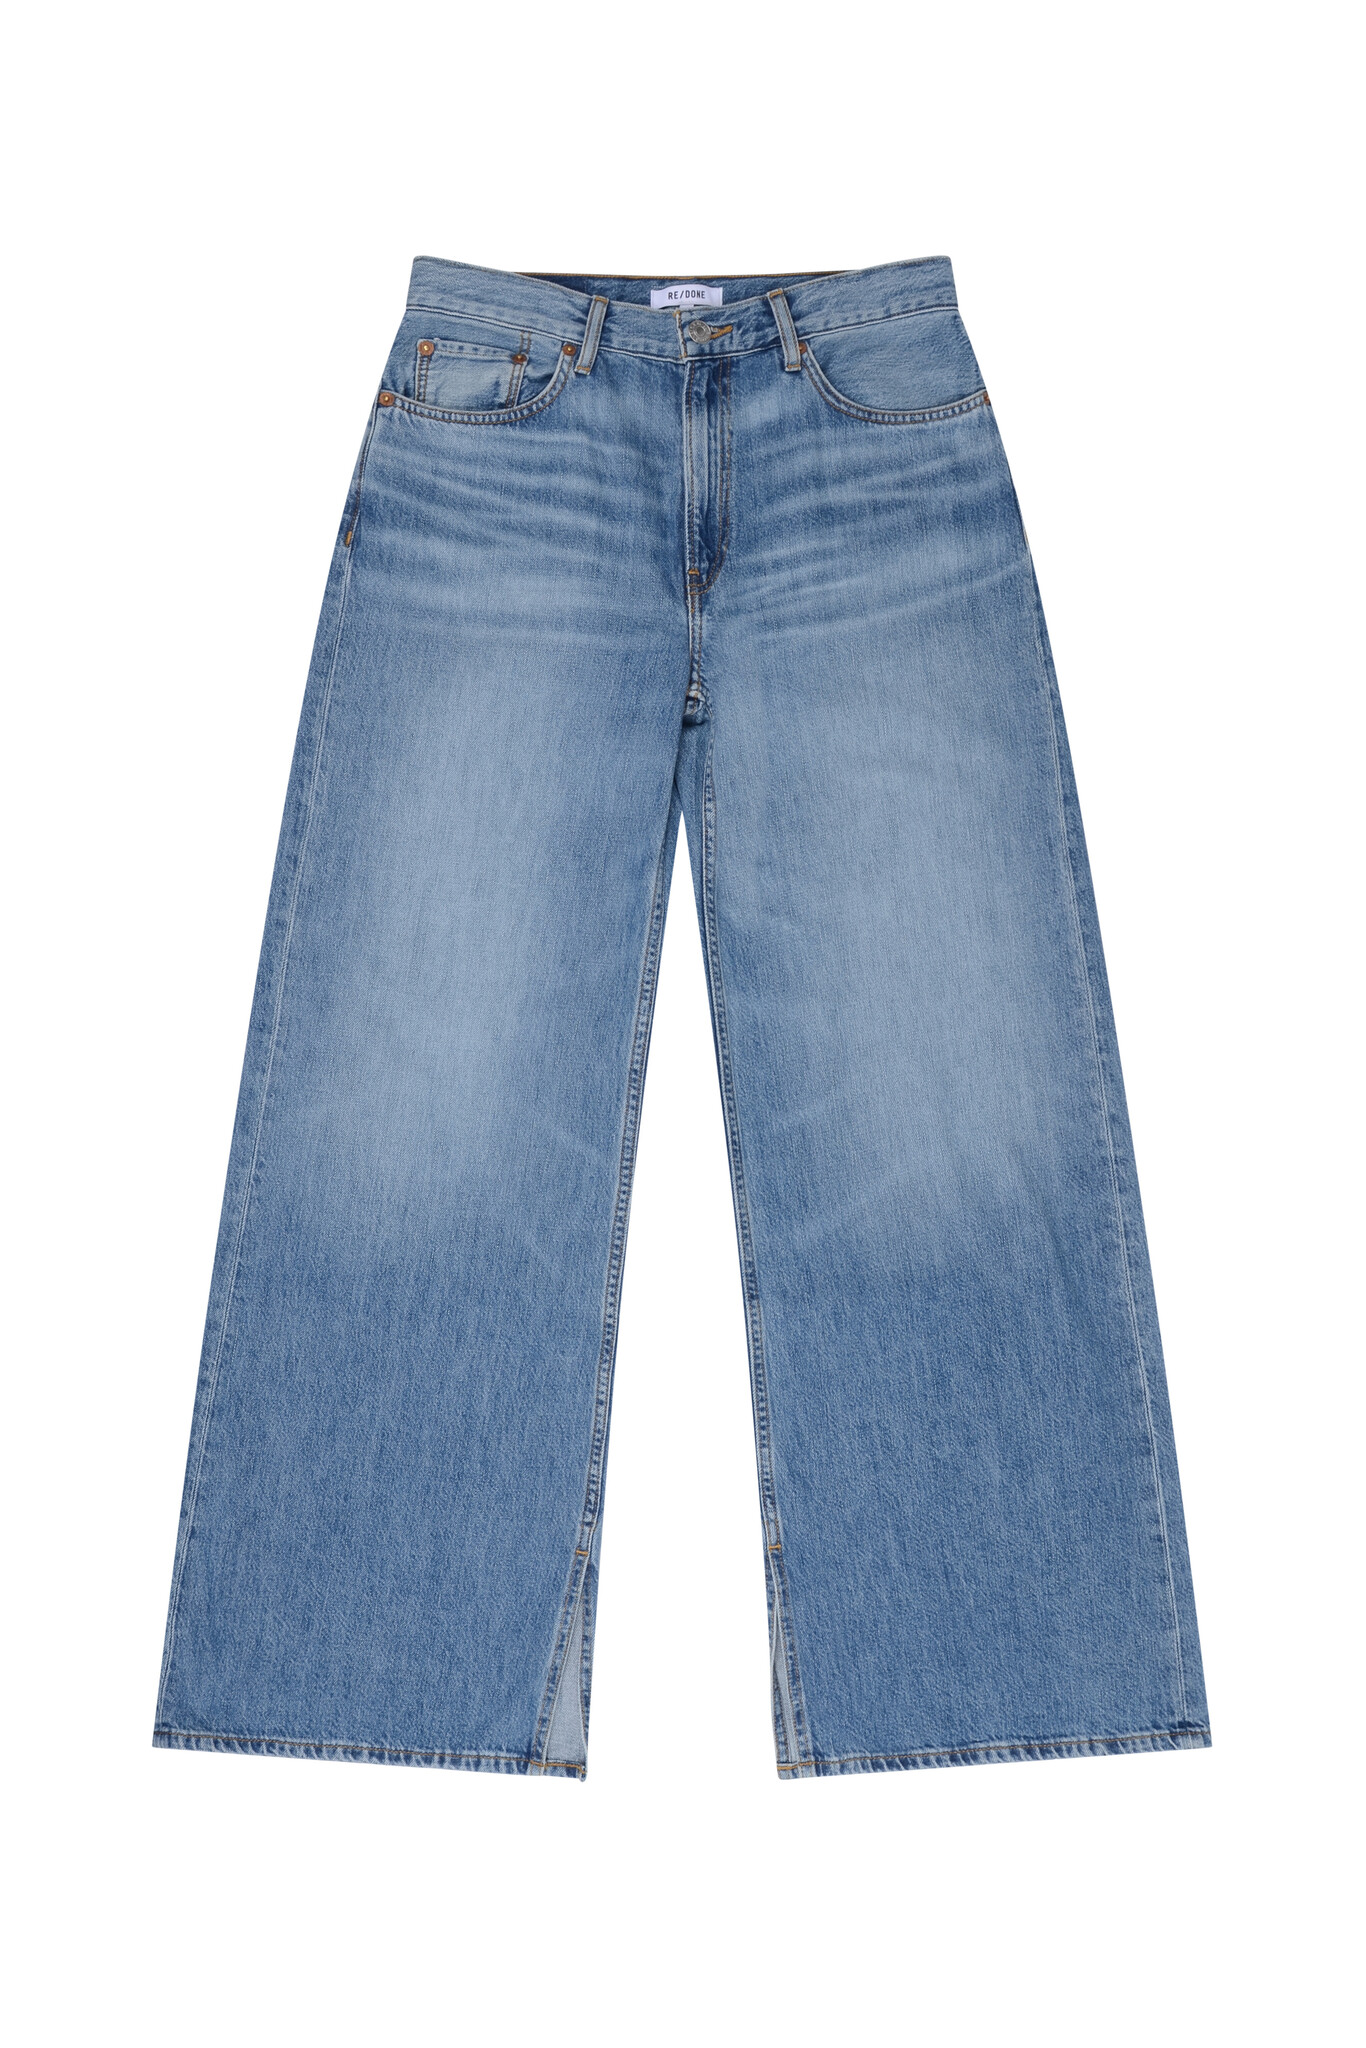 RE/DONE - Low Rider Loose Jeans Vintage Flow - Premium womenswear ...